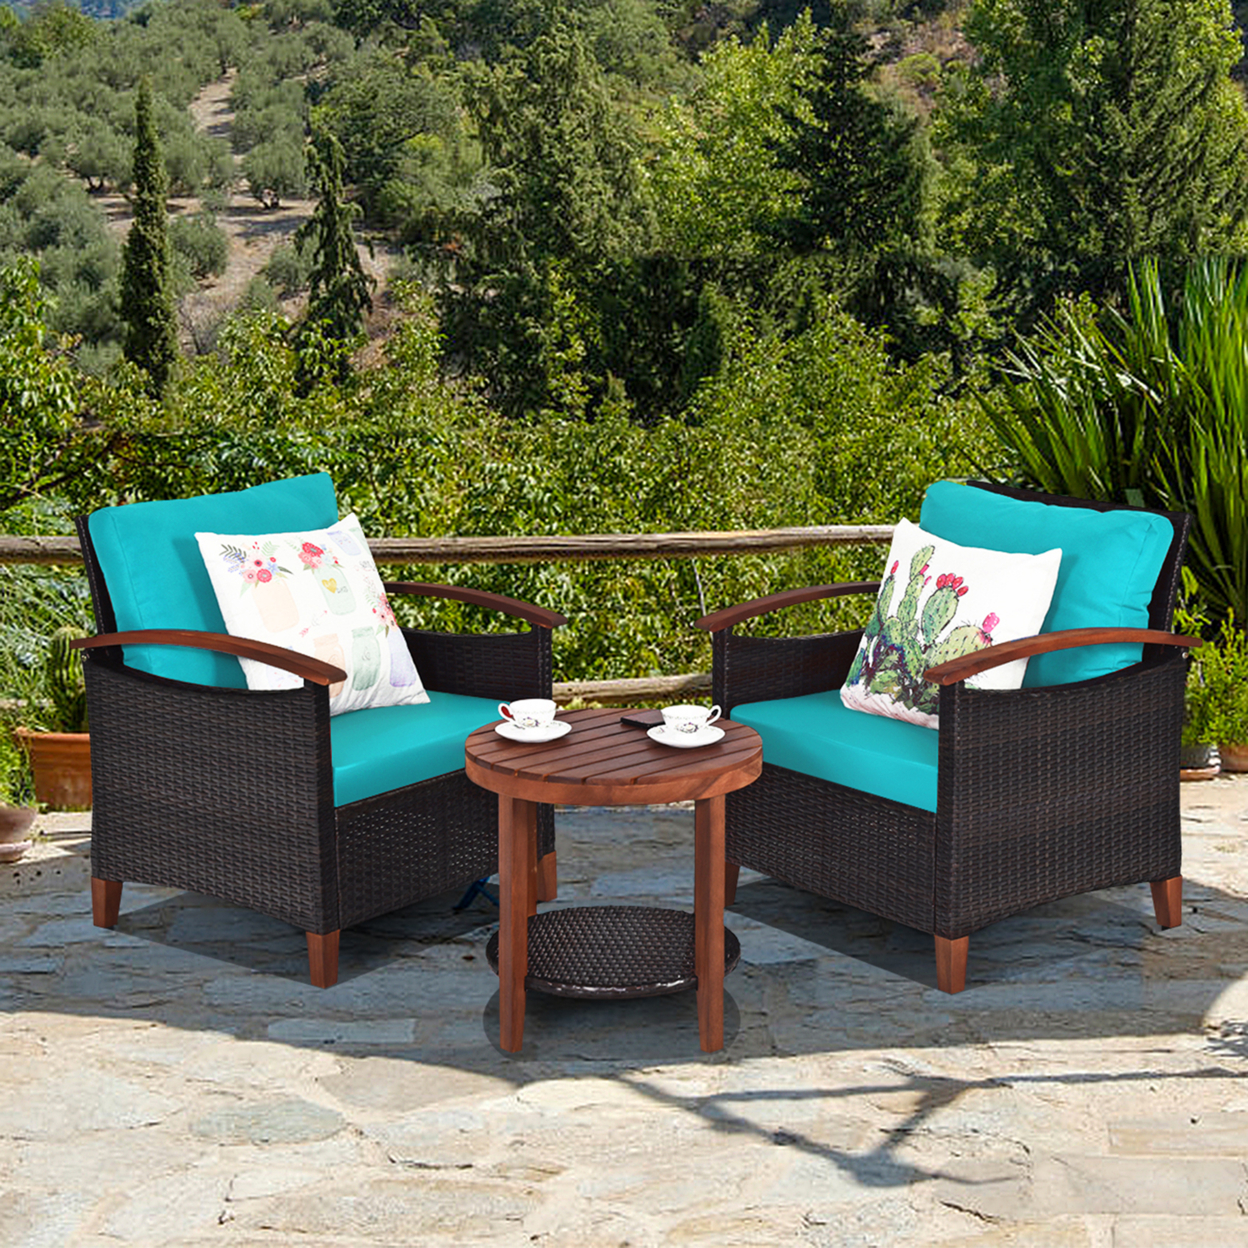 3PCS Patio Wicker Rattan Conversation Set Outdoor Furniture Set W/ Turquoise Cushion